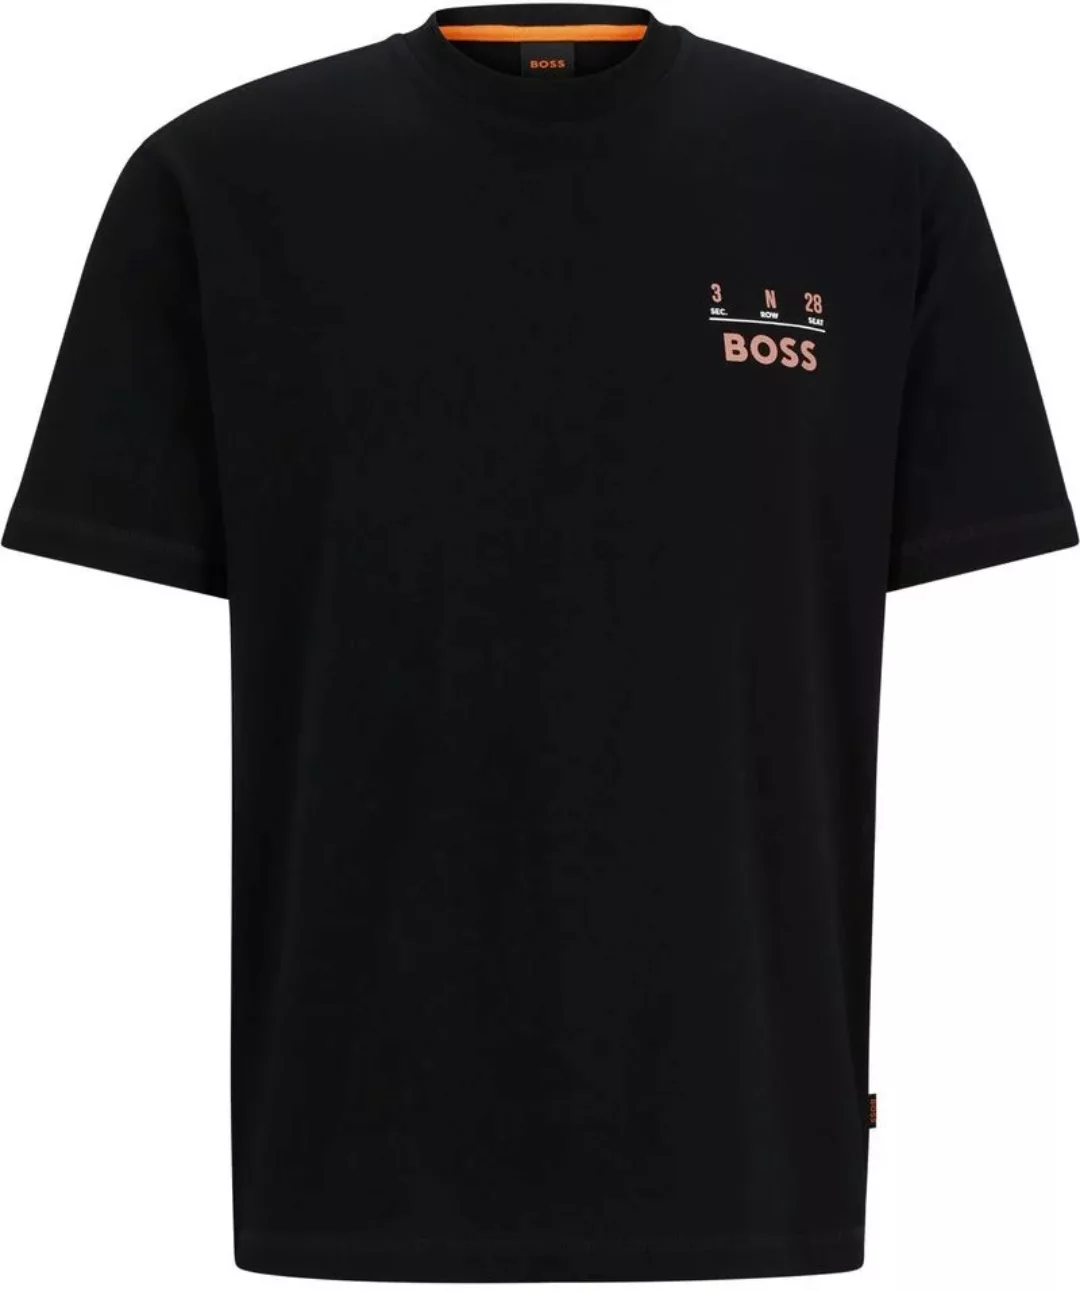 BOSS T-shirt Backprint Schwarz - Größe M günstig online kaufen